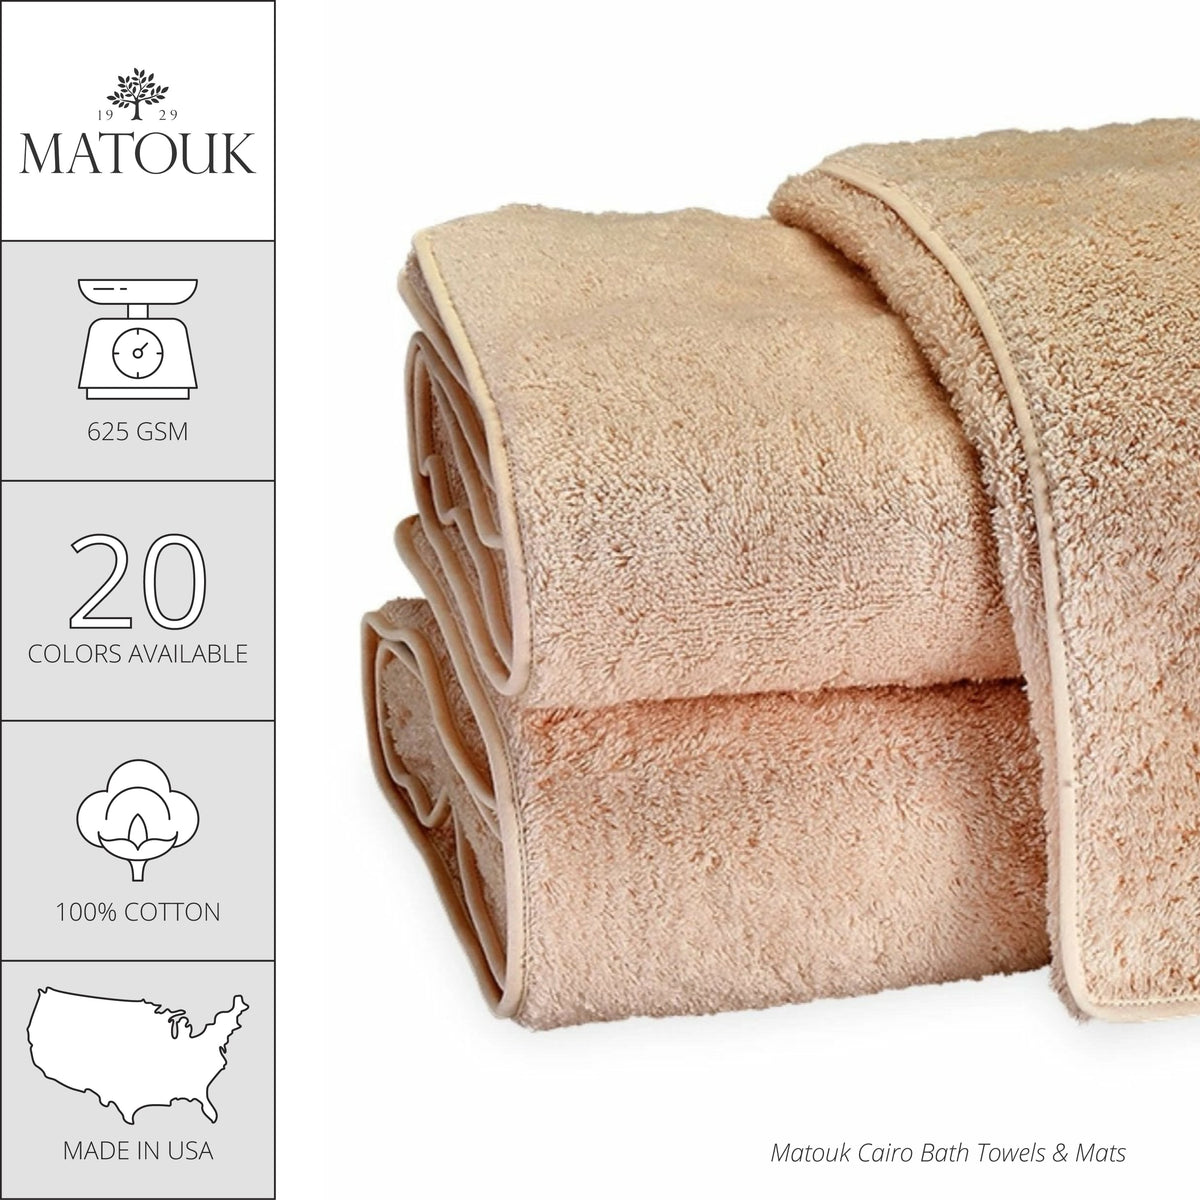 Matouk Cairo Scallop Bath Towels and Mats - Cherry